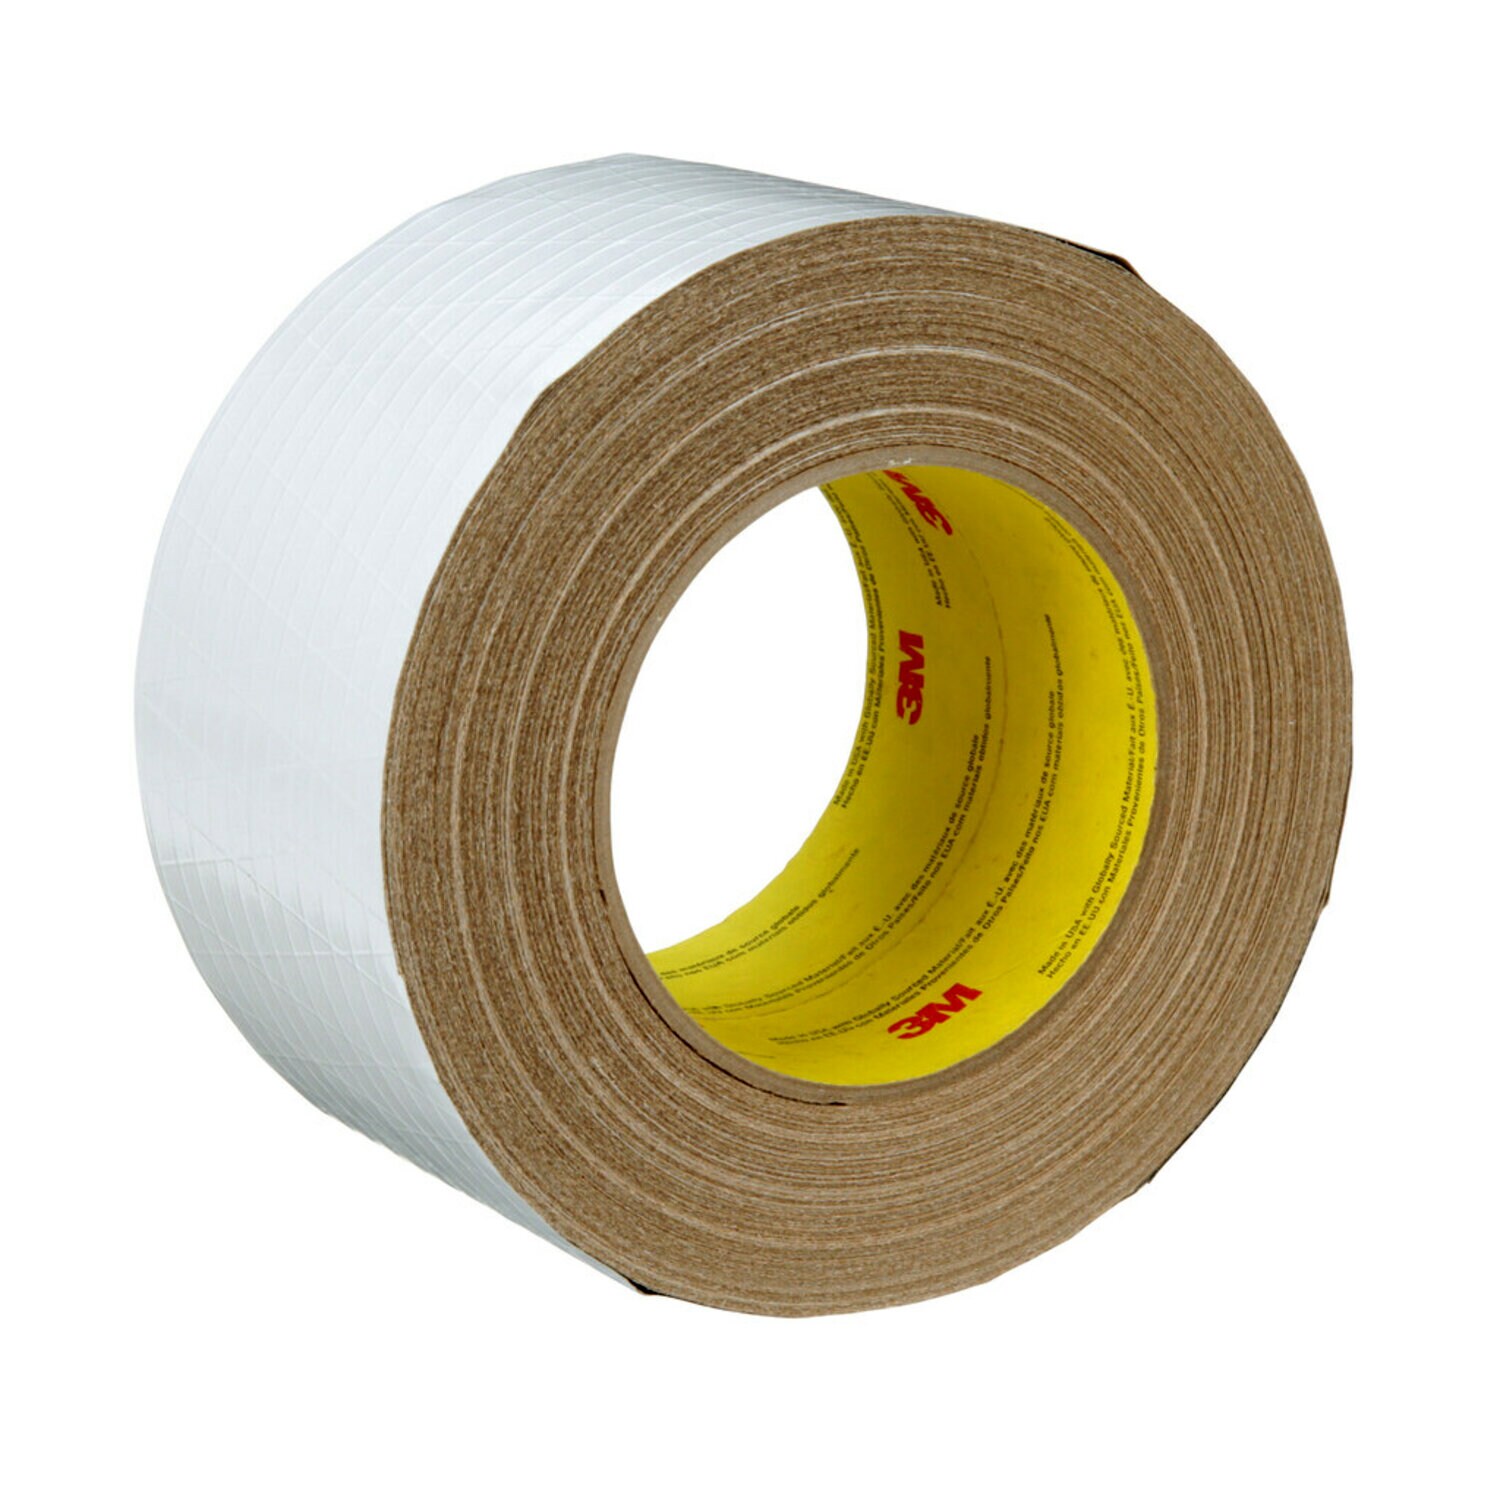 Reli. Painter's Tape, Blue | 8 Rolls Bulk | 1 x 55 Yards Per Roll (440  Yards Total) | Blue Tape/Painters Tape 1 Inch Wide | Paint Tape for Walls